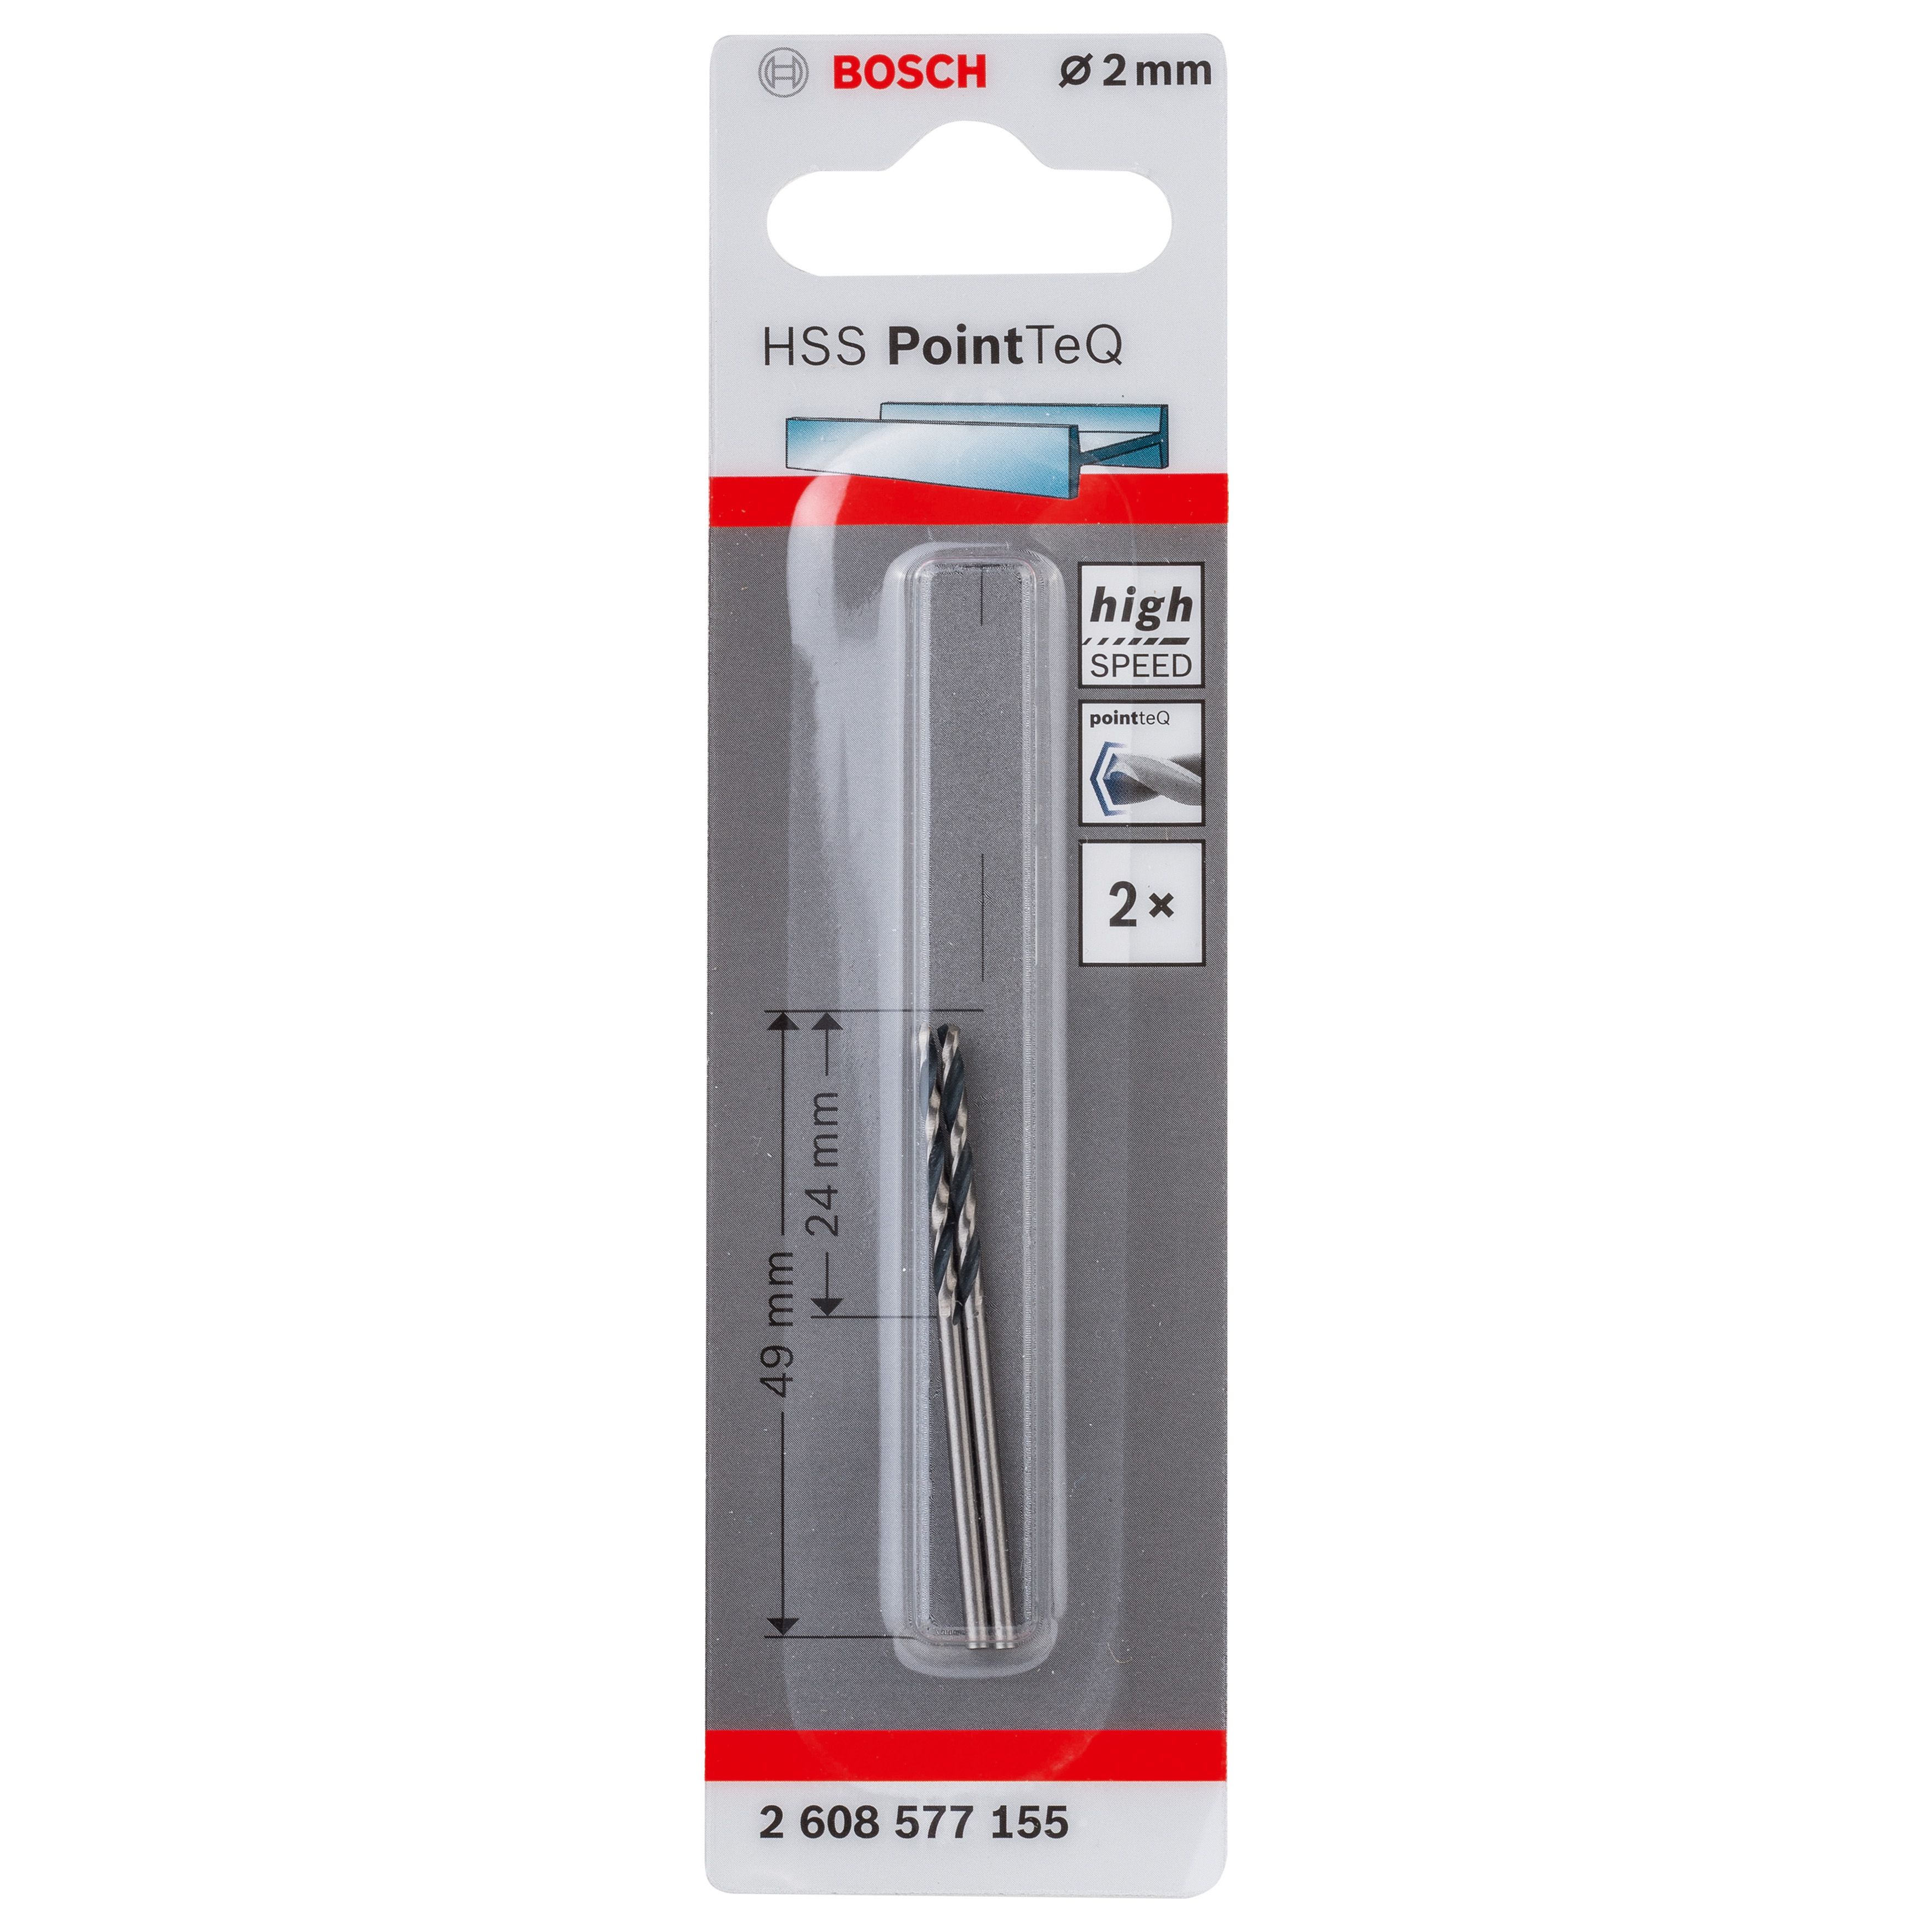 Bosch Professional Round Metal Drill bit (Dia)2mm (L)49mm, Pack of 2